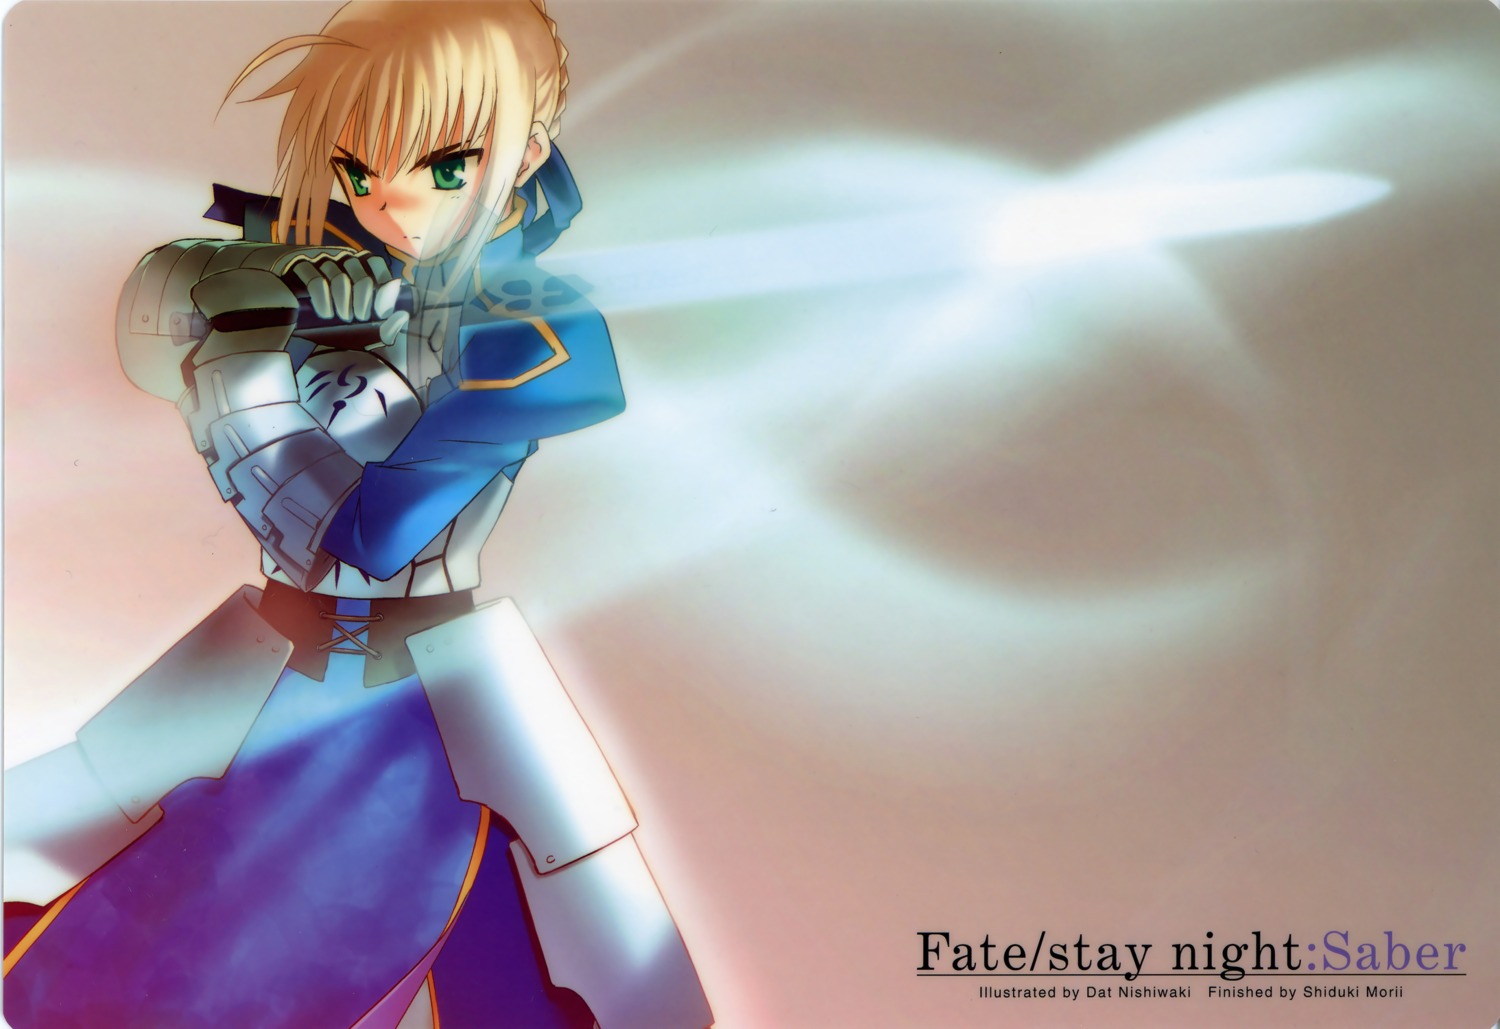 fate/stay_night nishiwaki_dat saber